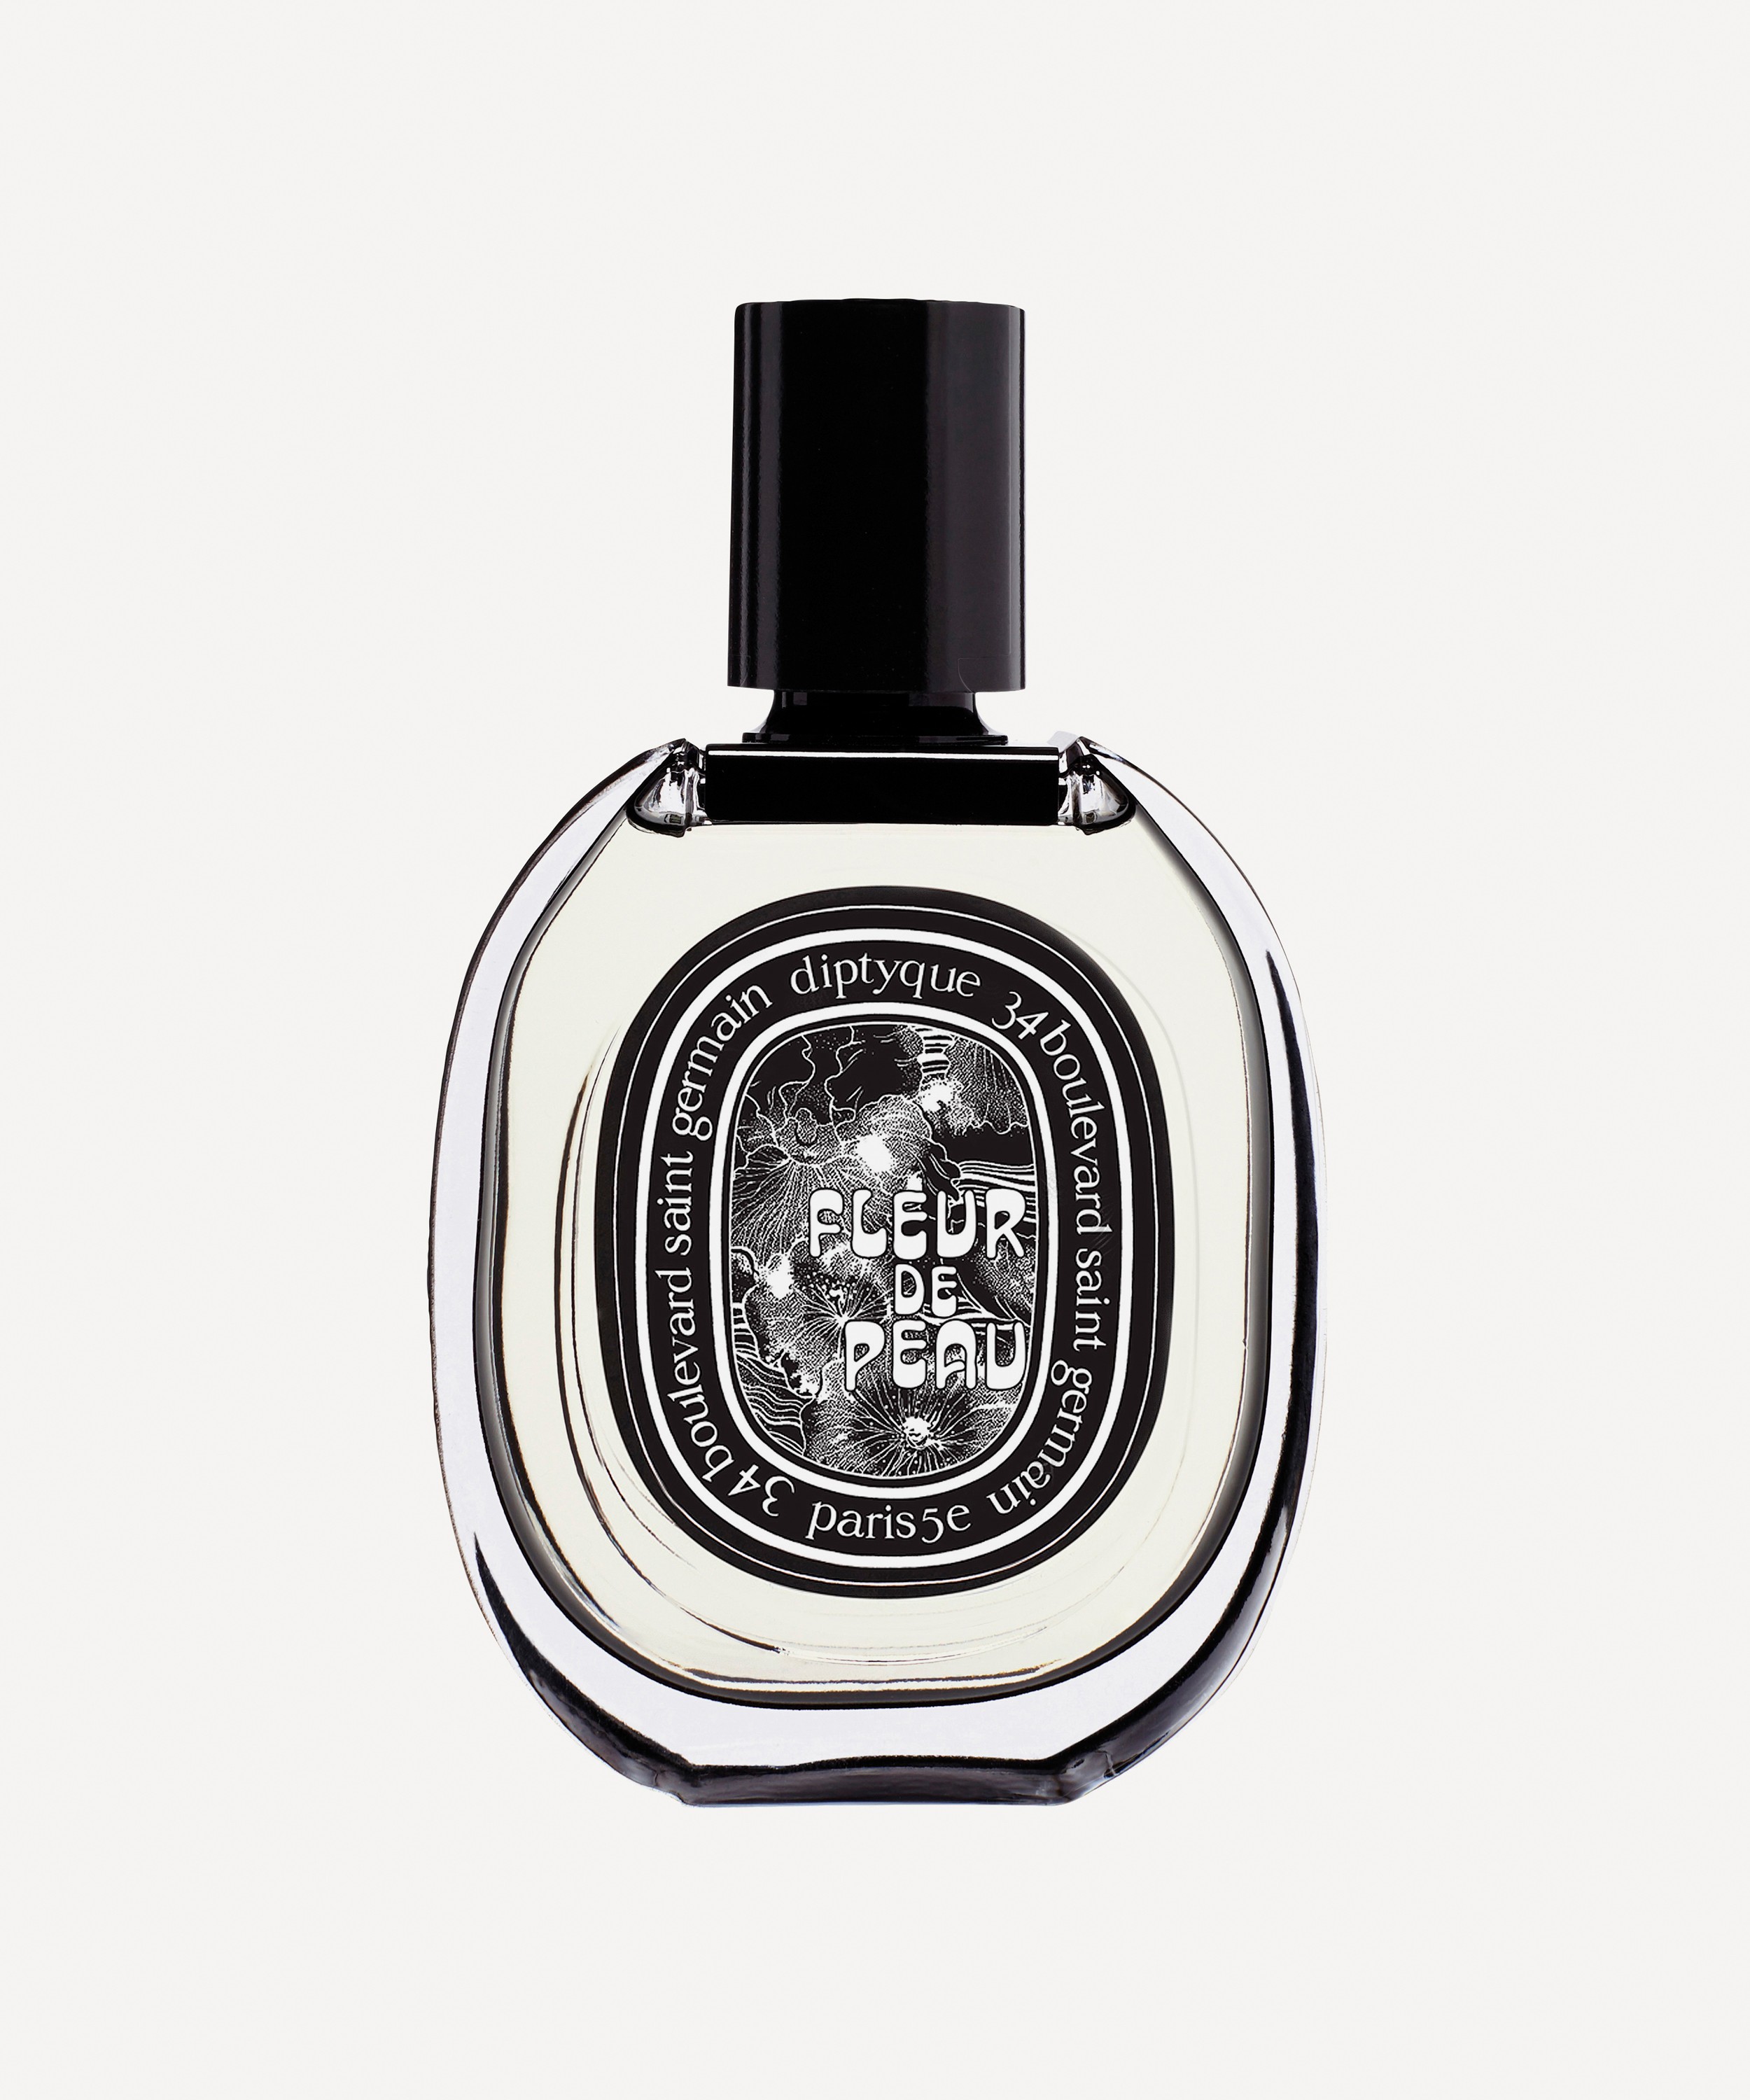 Perfume ME 191: Similar To Matiere Noir By Louis Vuitton